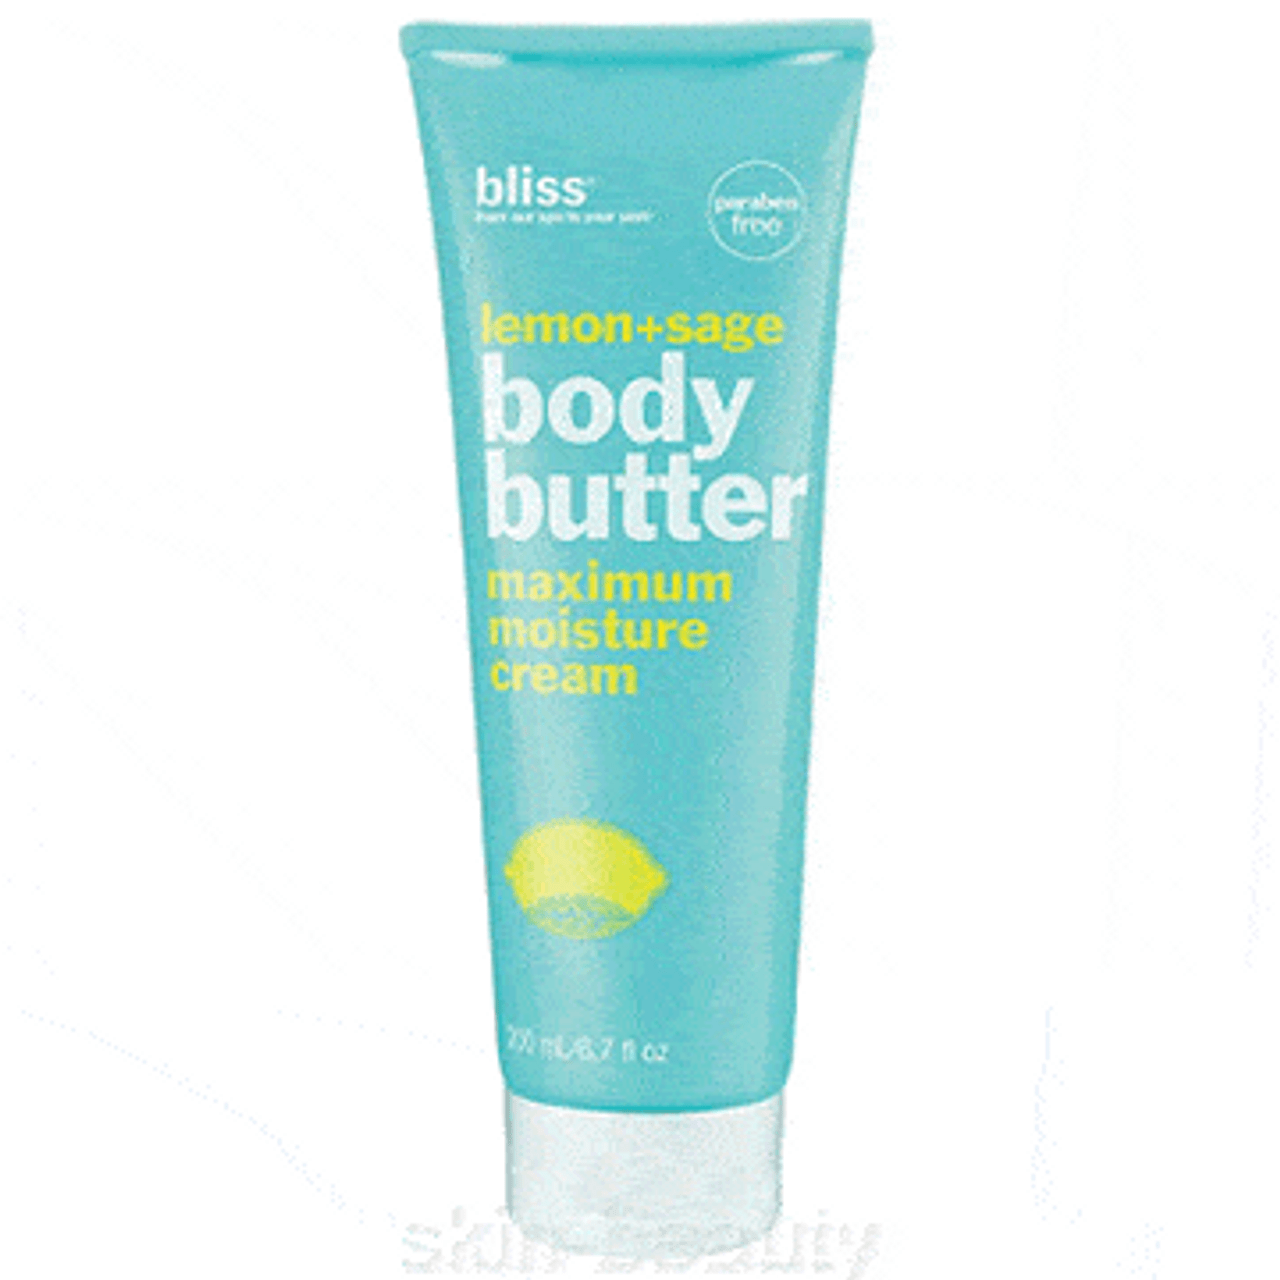 Bliss Lemon Sage Body Butter - 6.7 oz